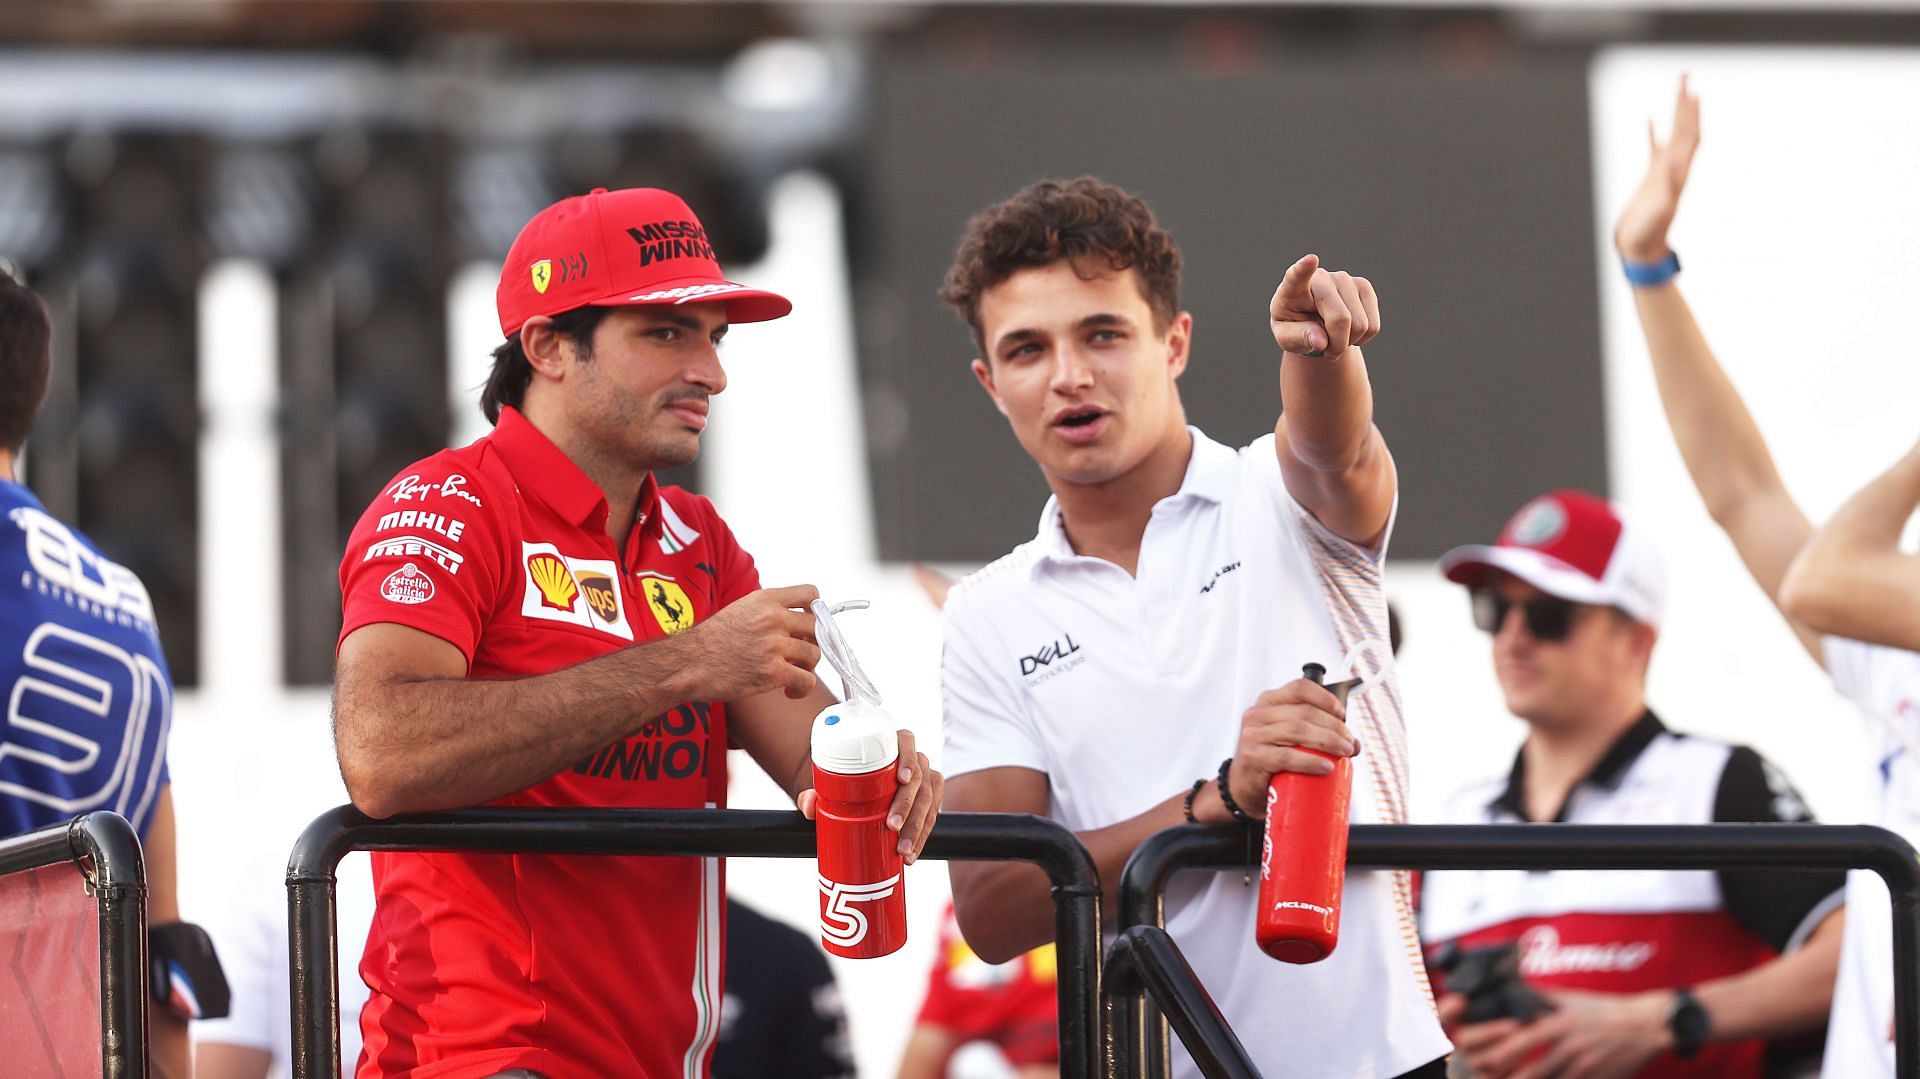 Carlos Sainz (left) and Lando Norris (right) at the F1 Grand Prix of Qatar